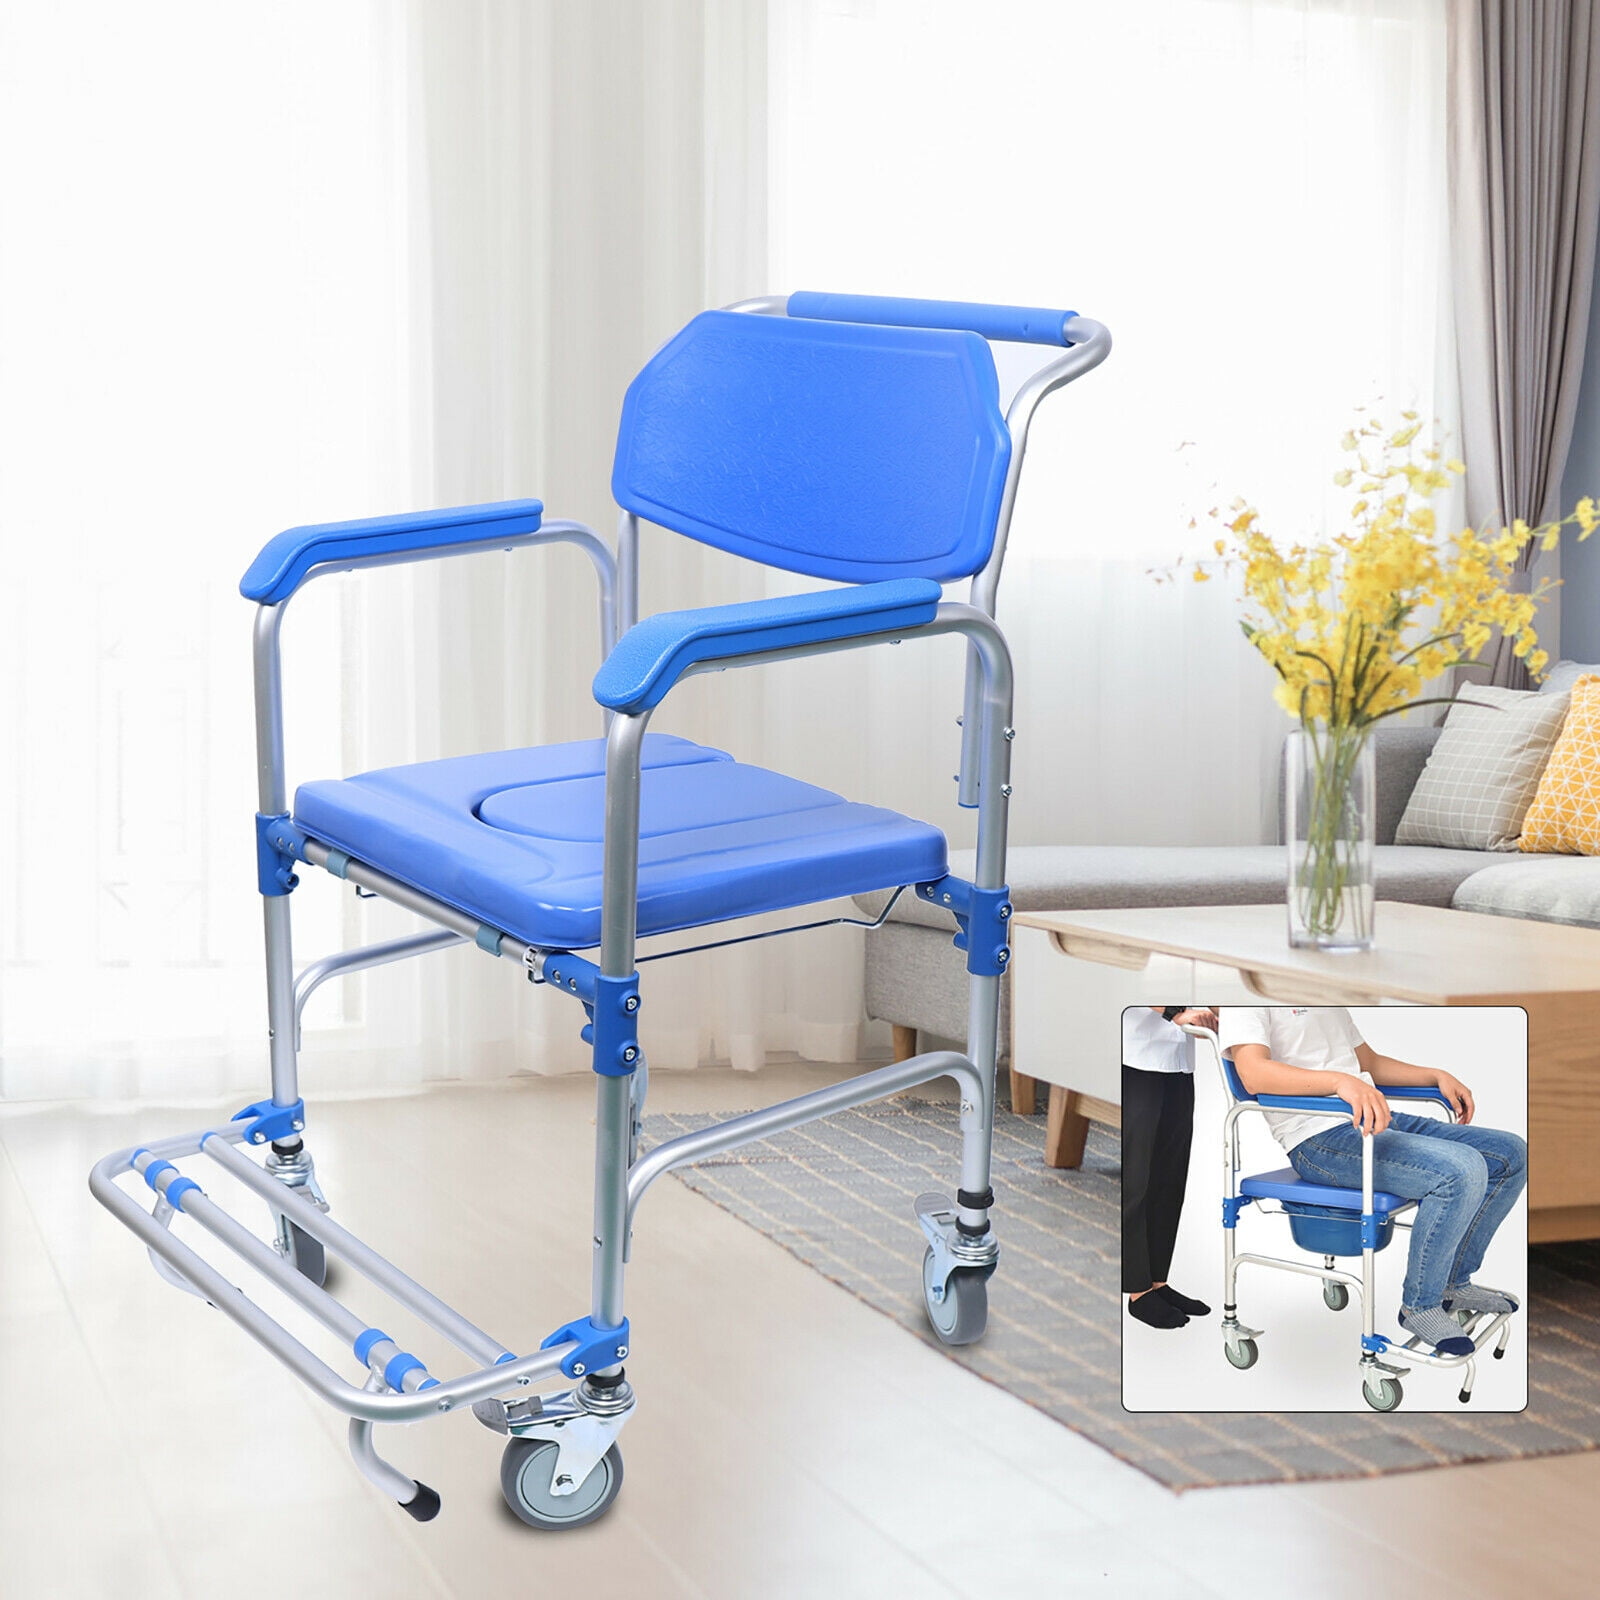 ZhdnBhnos 350lb Medical Mobility Elderly Potty Chair Waterproof